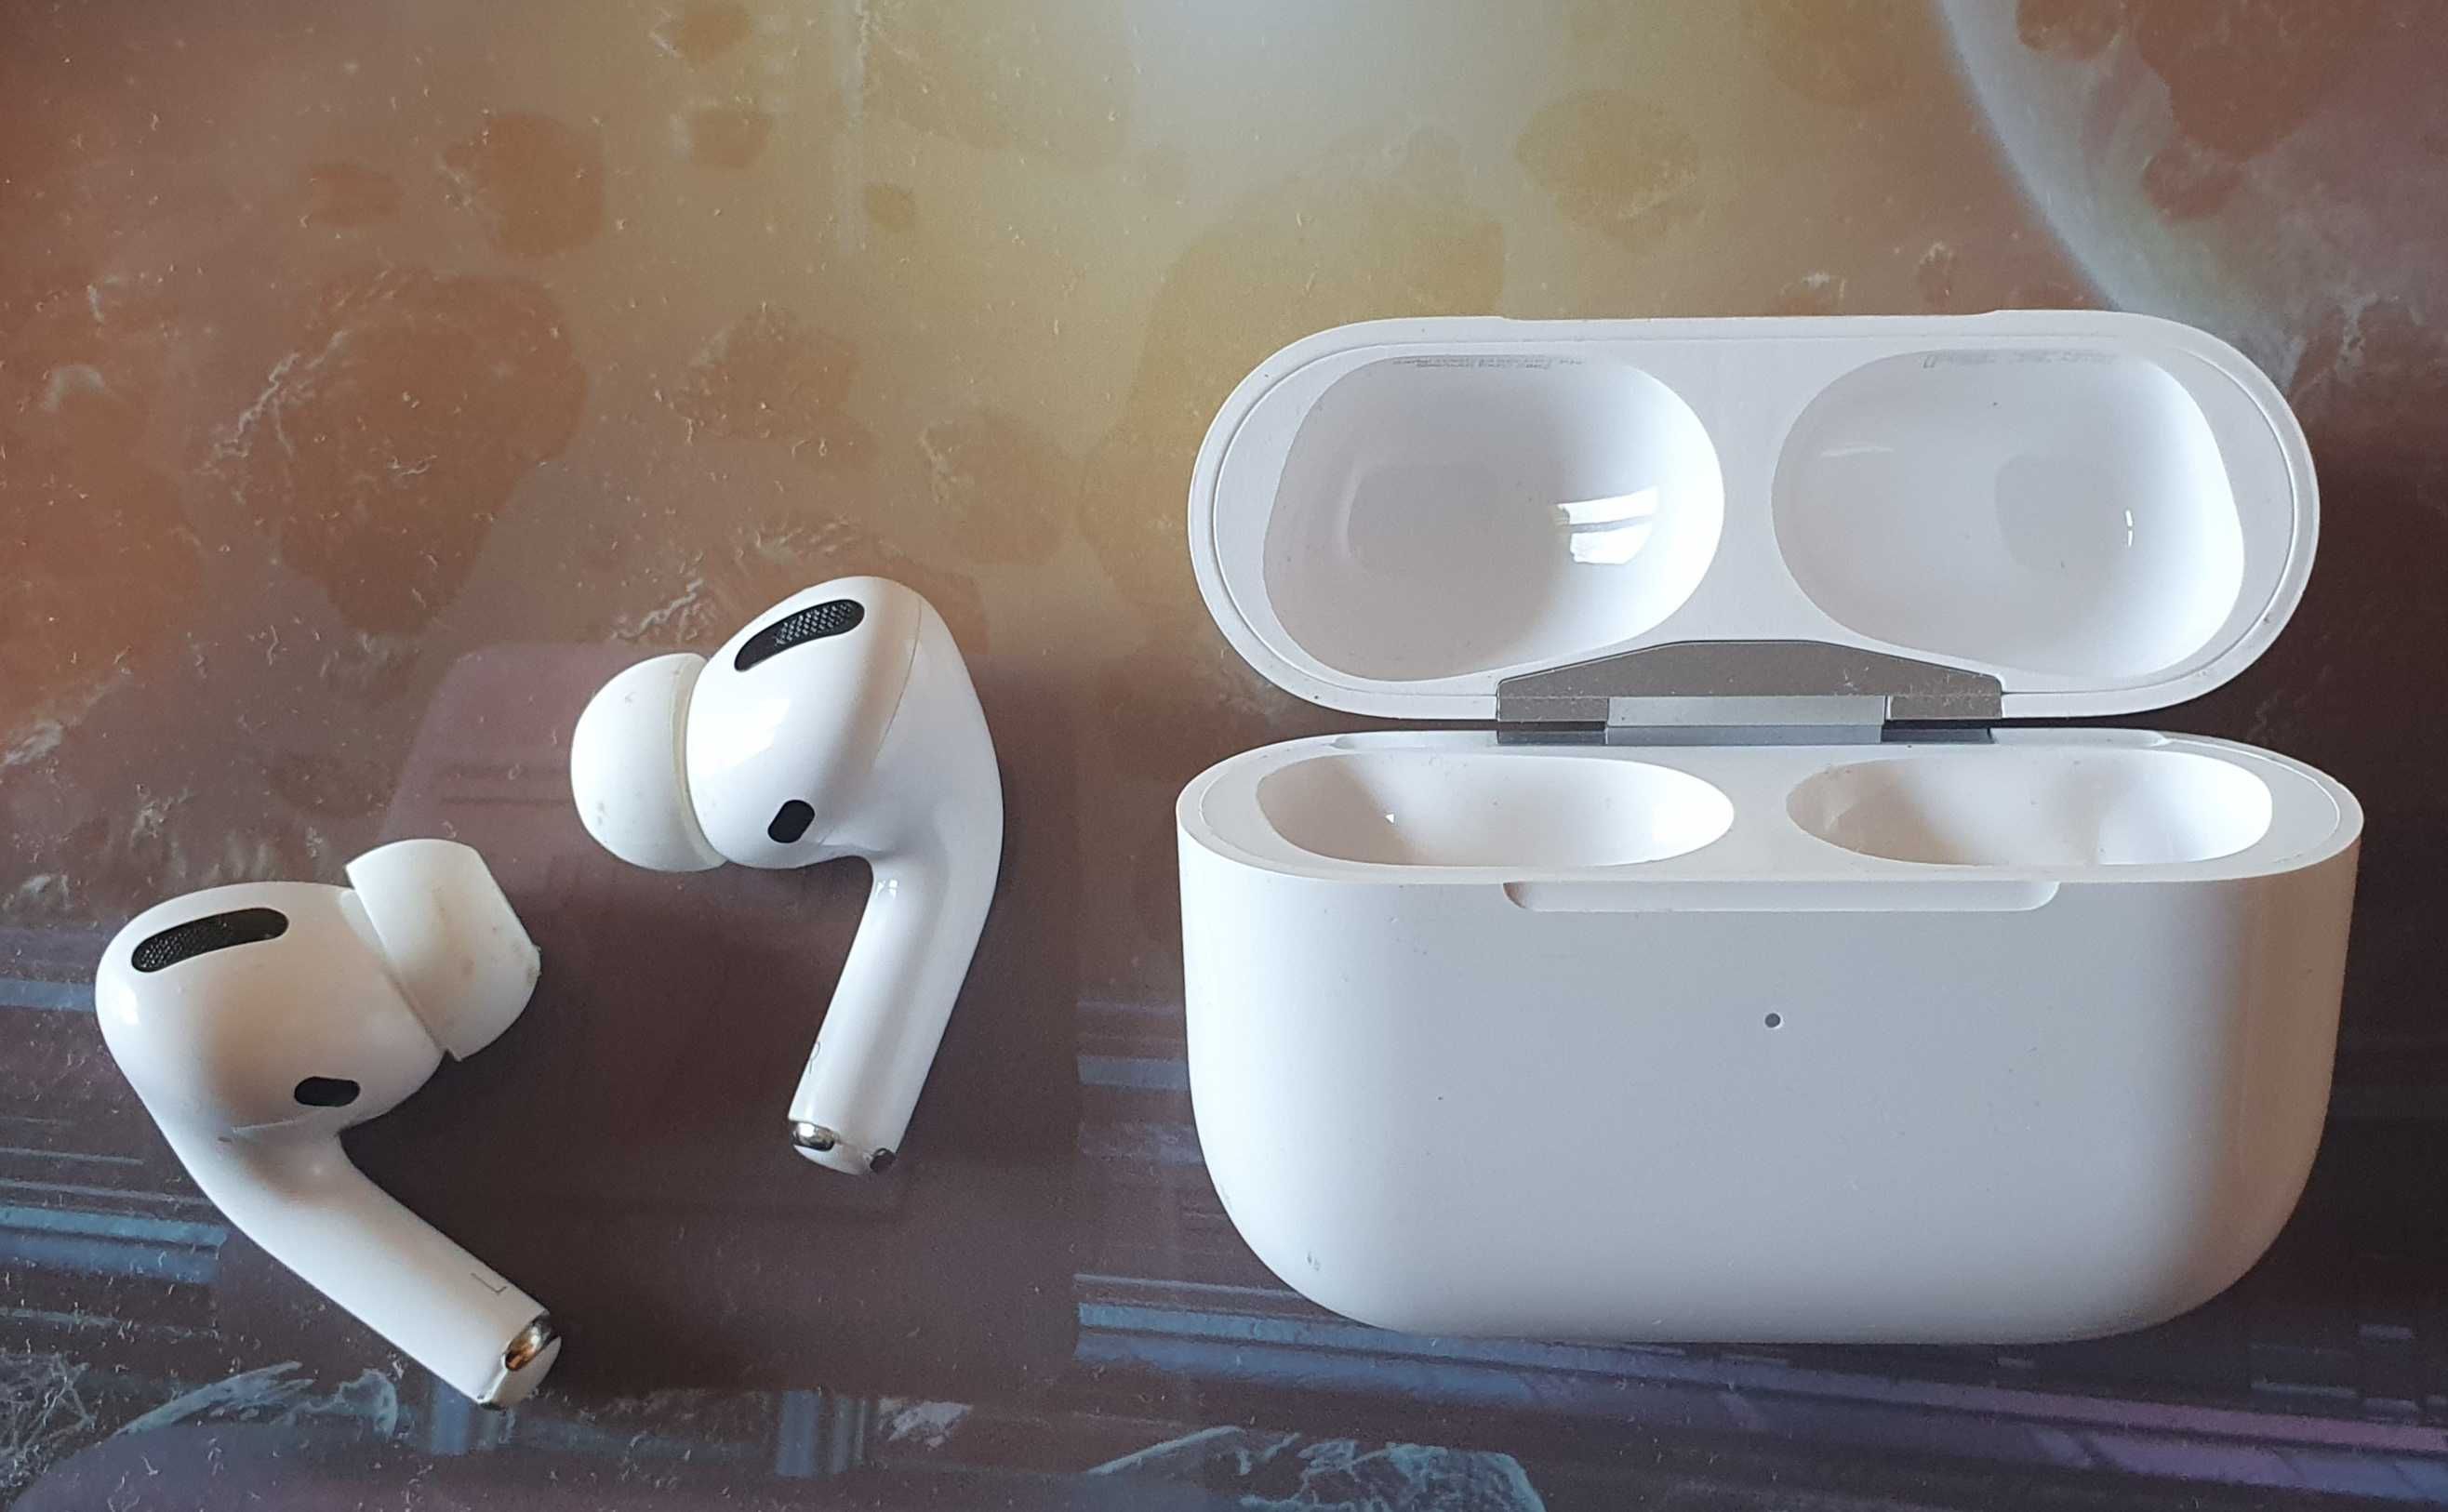 Casti Apple Airpods Pro (2nd Generation) - 2022